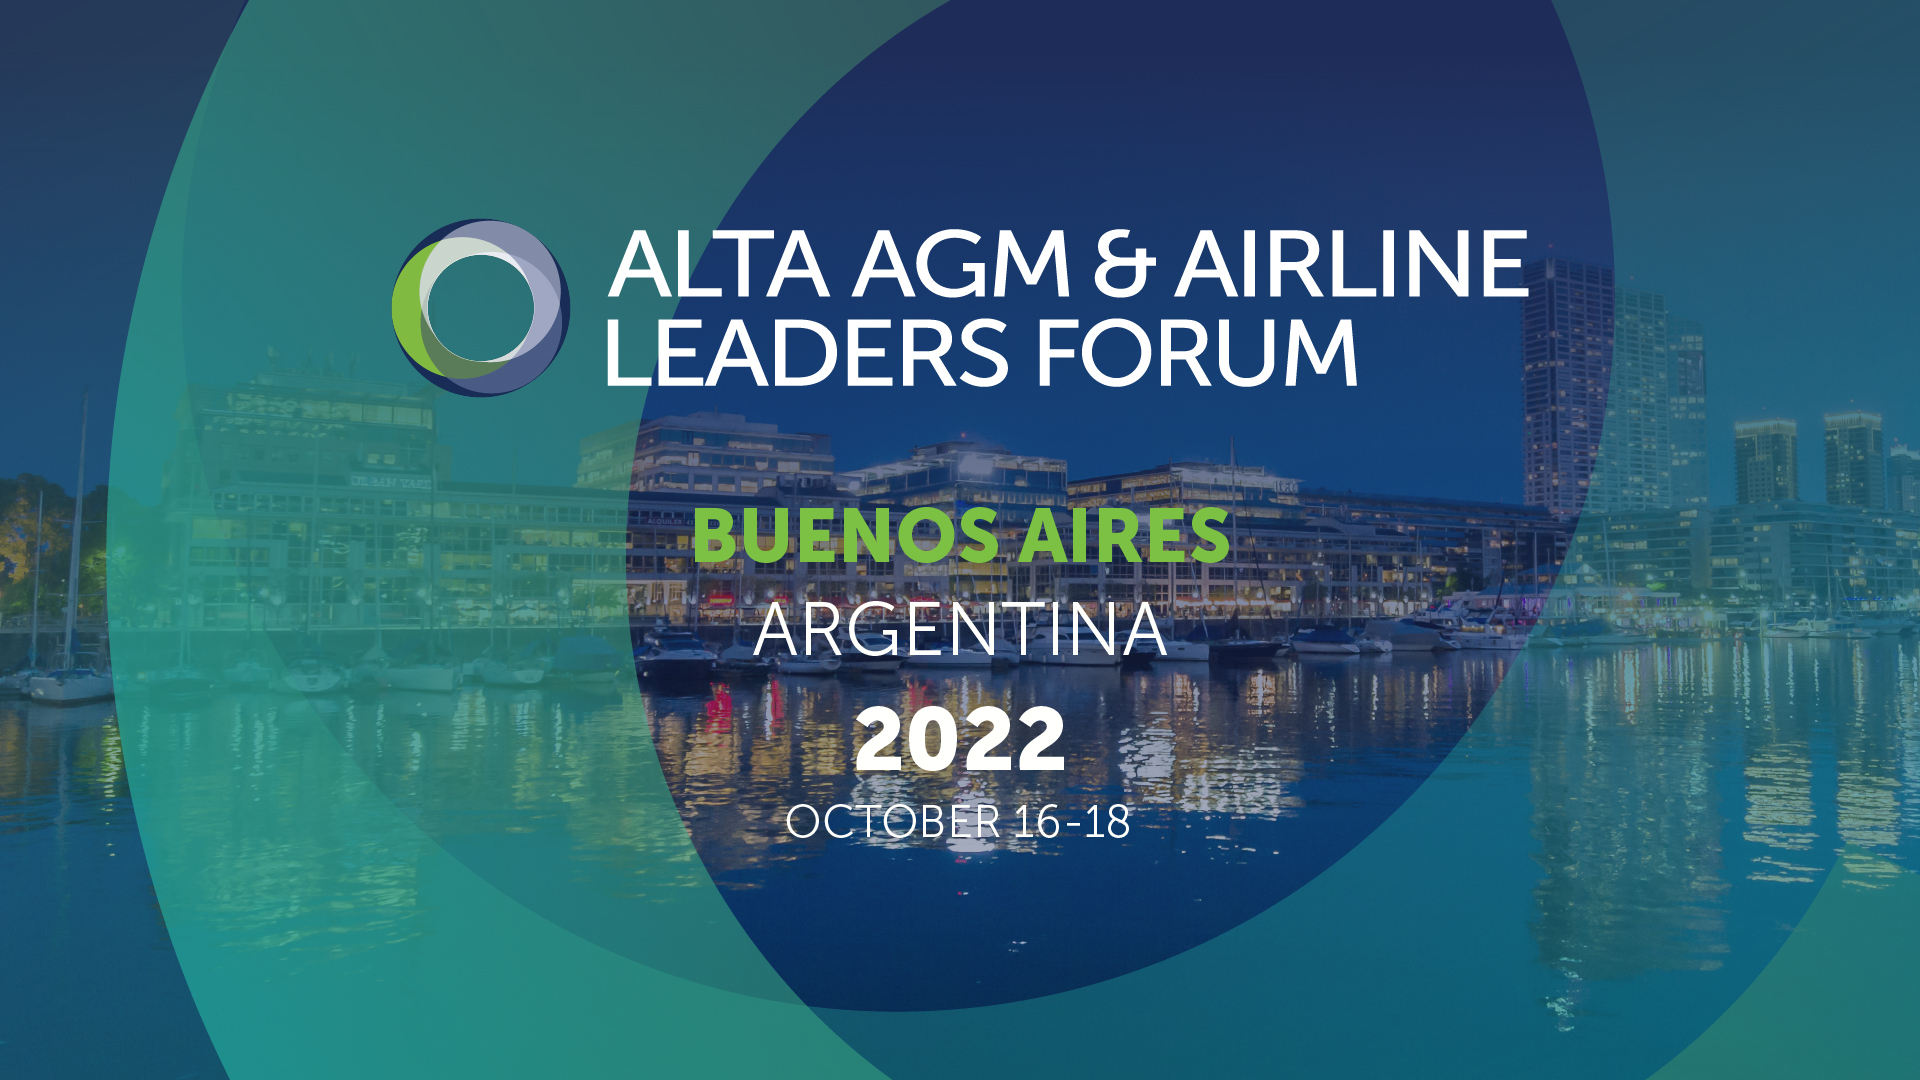 ALTA NEWS - Avianca CEO, Adrian Neuhauser, is elected Chairman of ALTA's Executive Committee